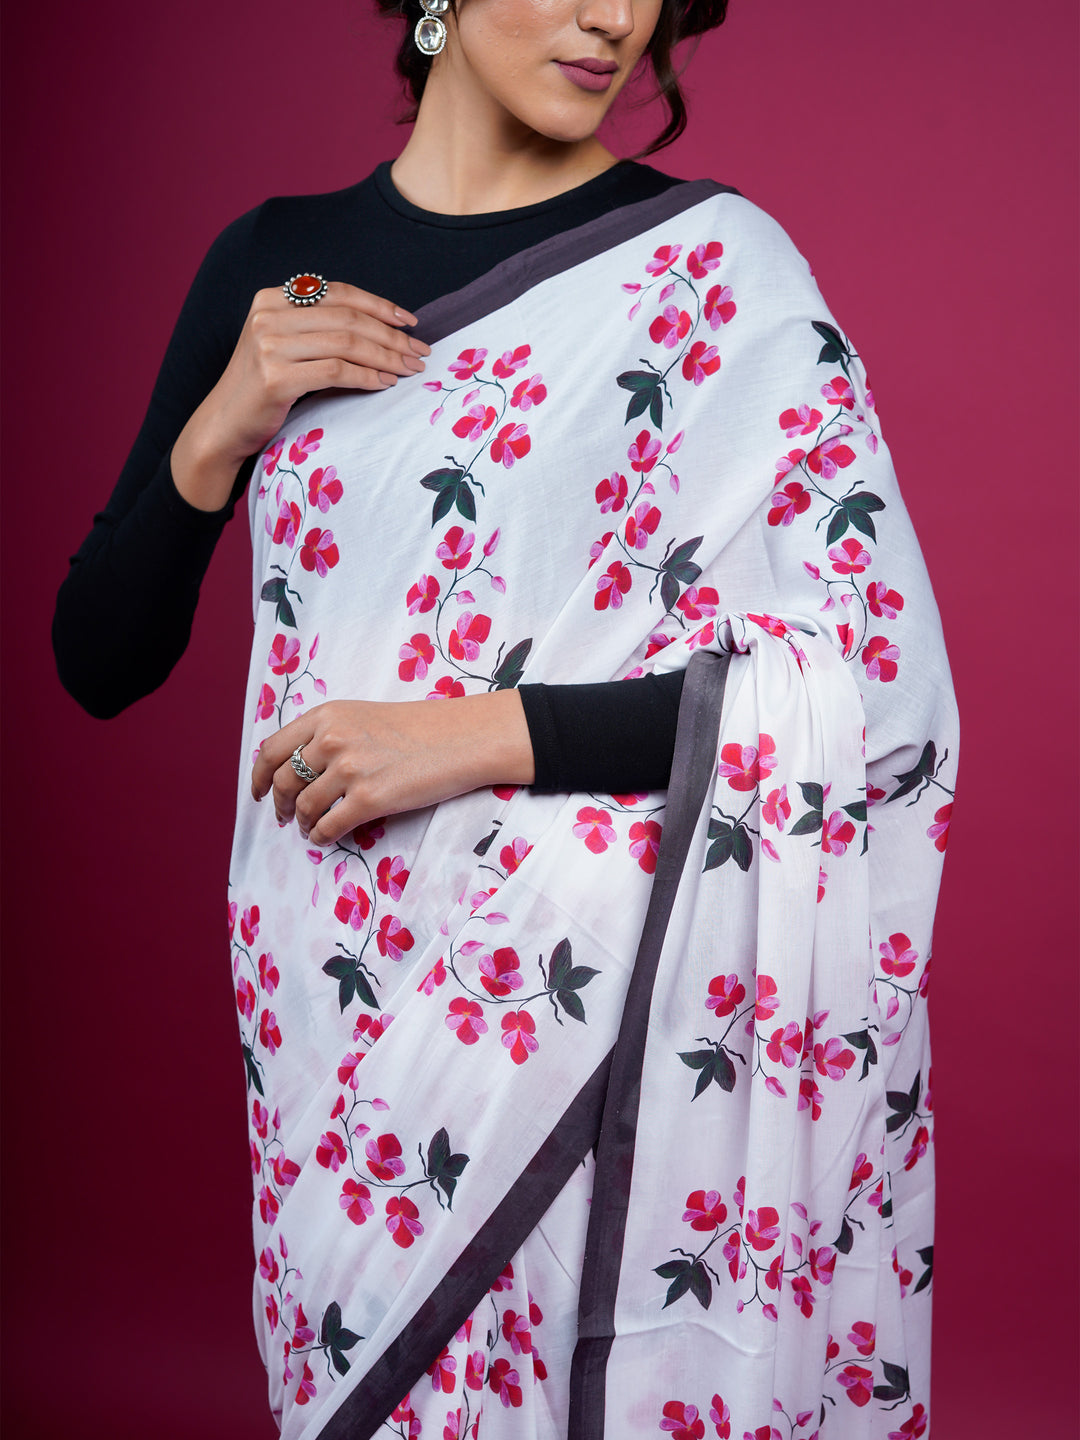 Buta Buti Floral Printed Cotton Saree With Tassels Embellishment